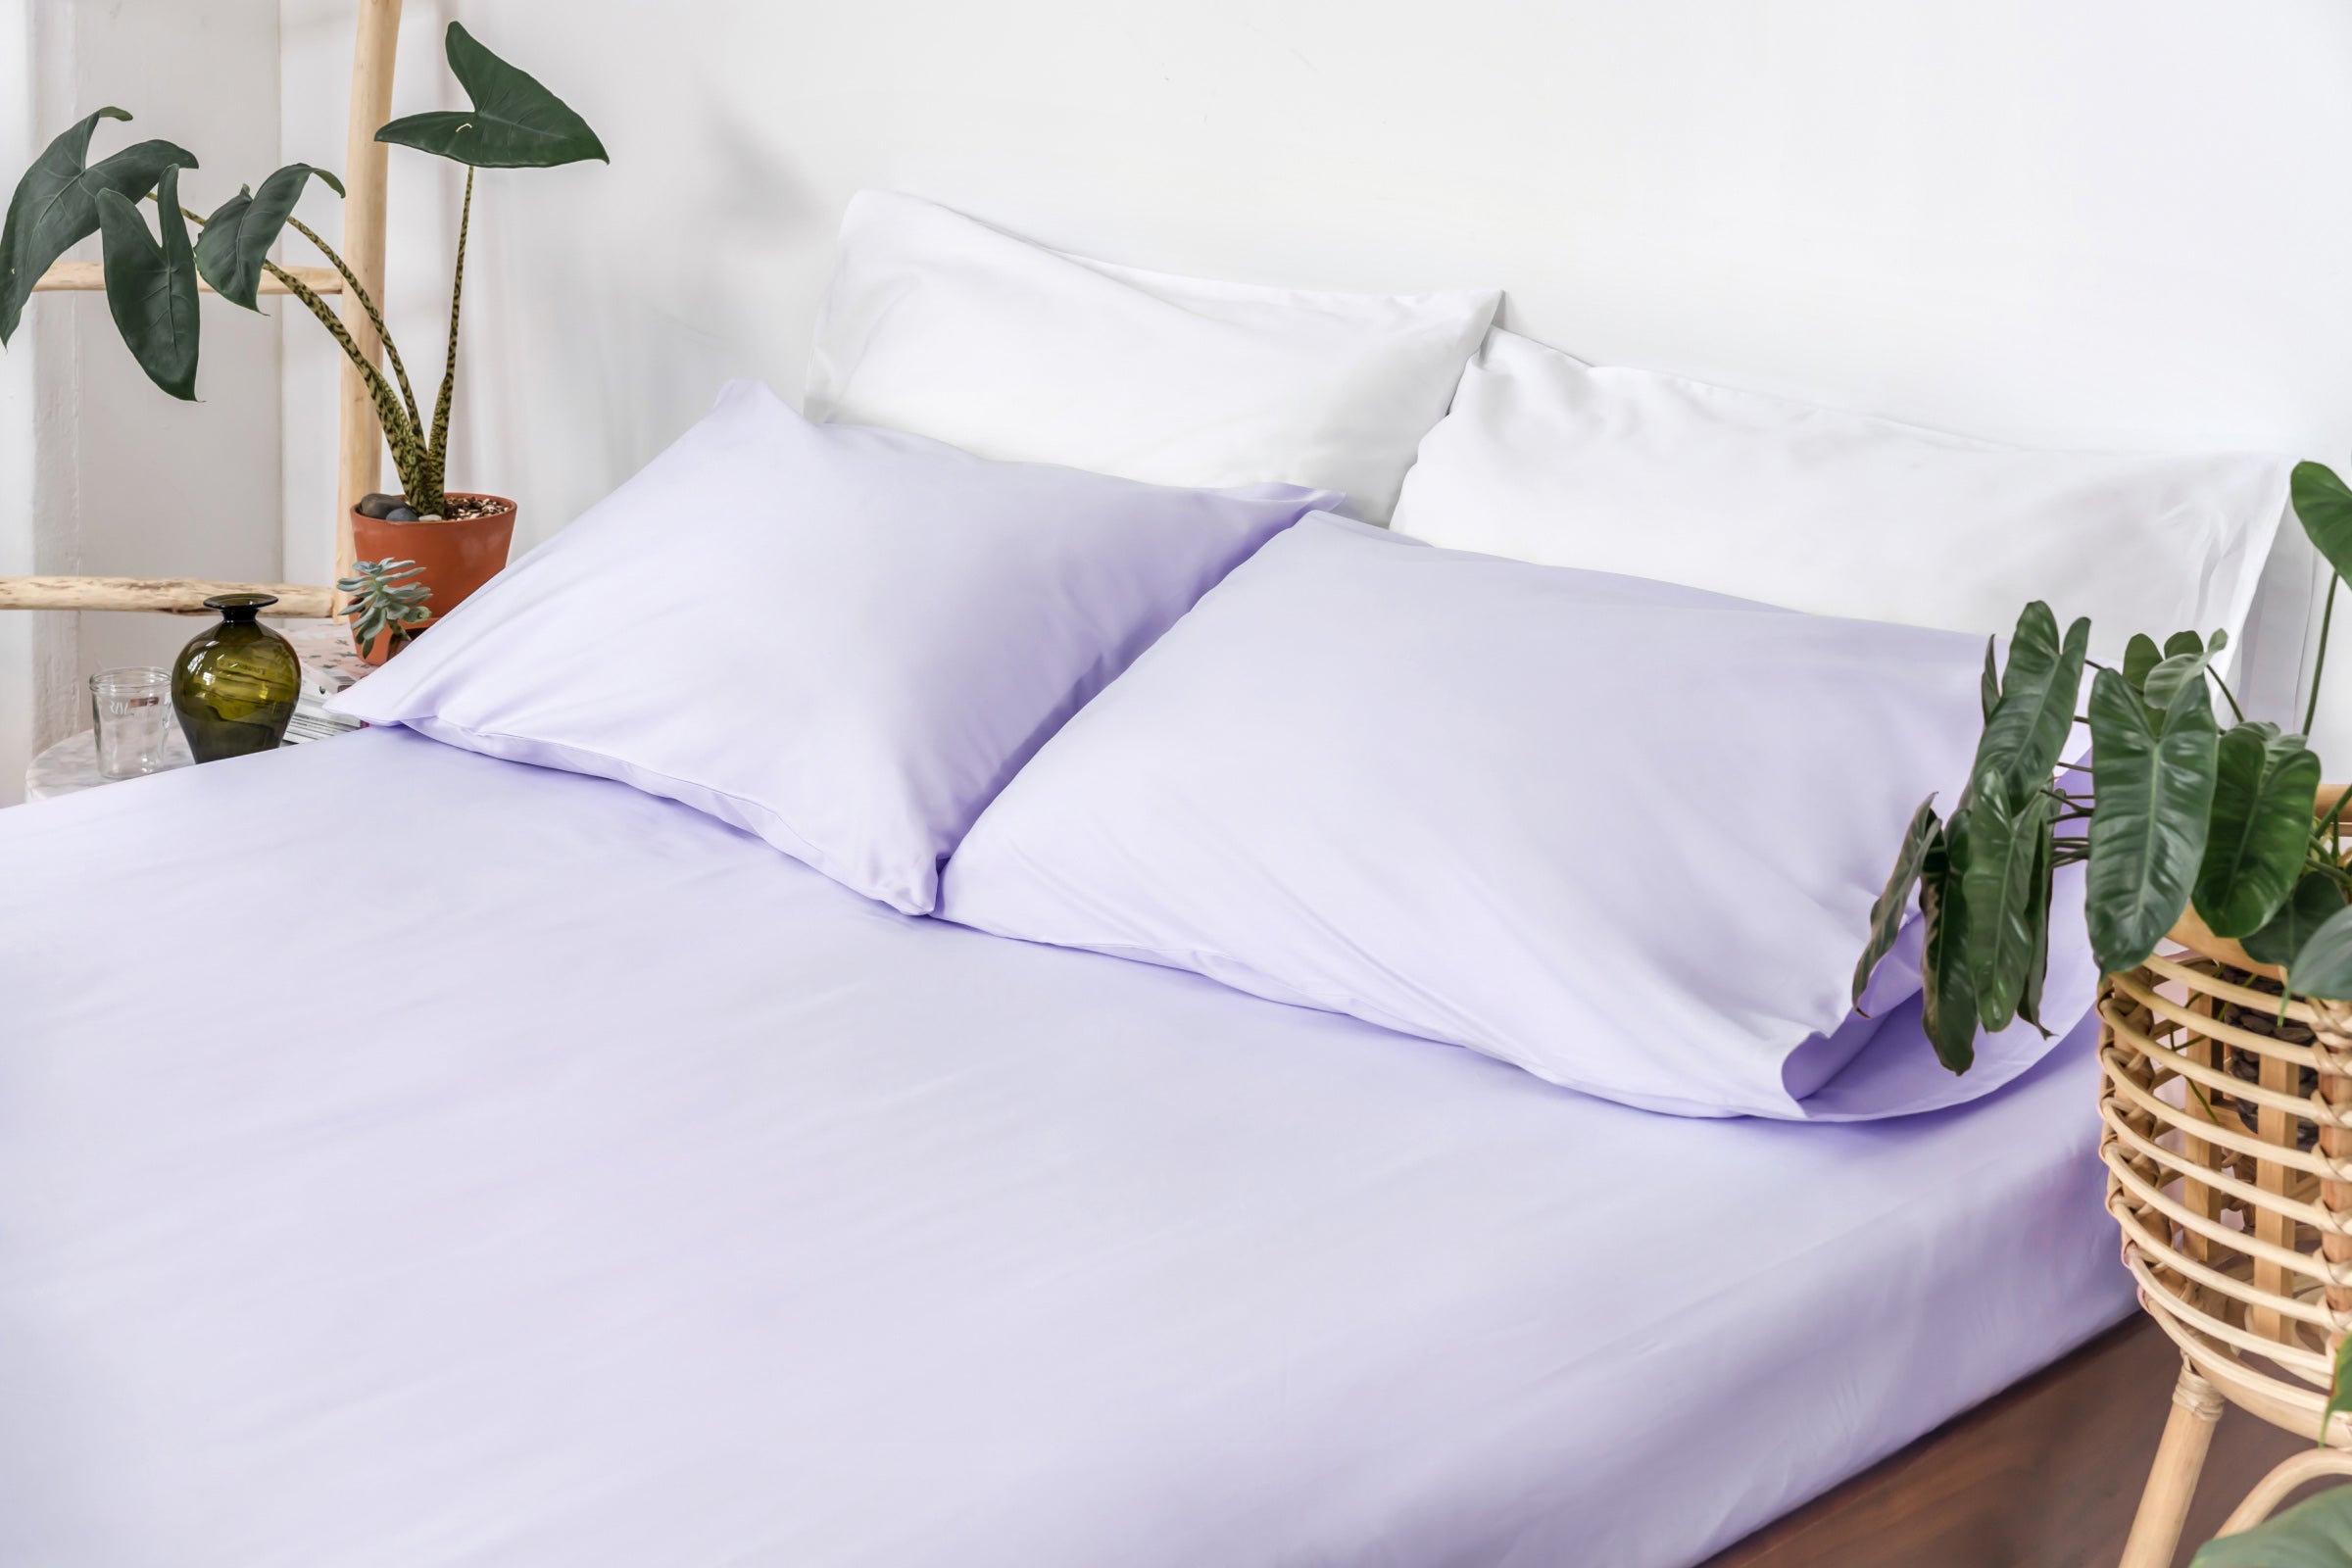 classic-lilac-fitted-sheet-pillowcase-pair-white-pillowcase-pair-by-sojao.jpg